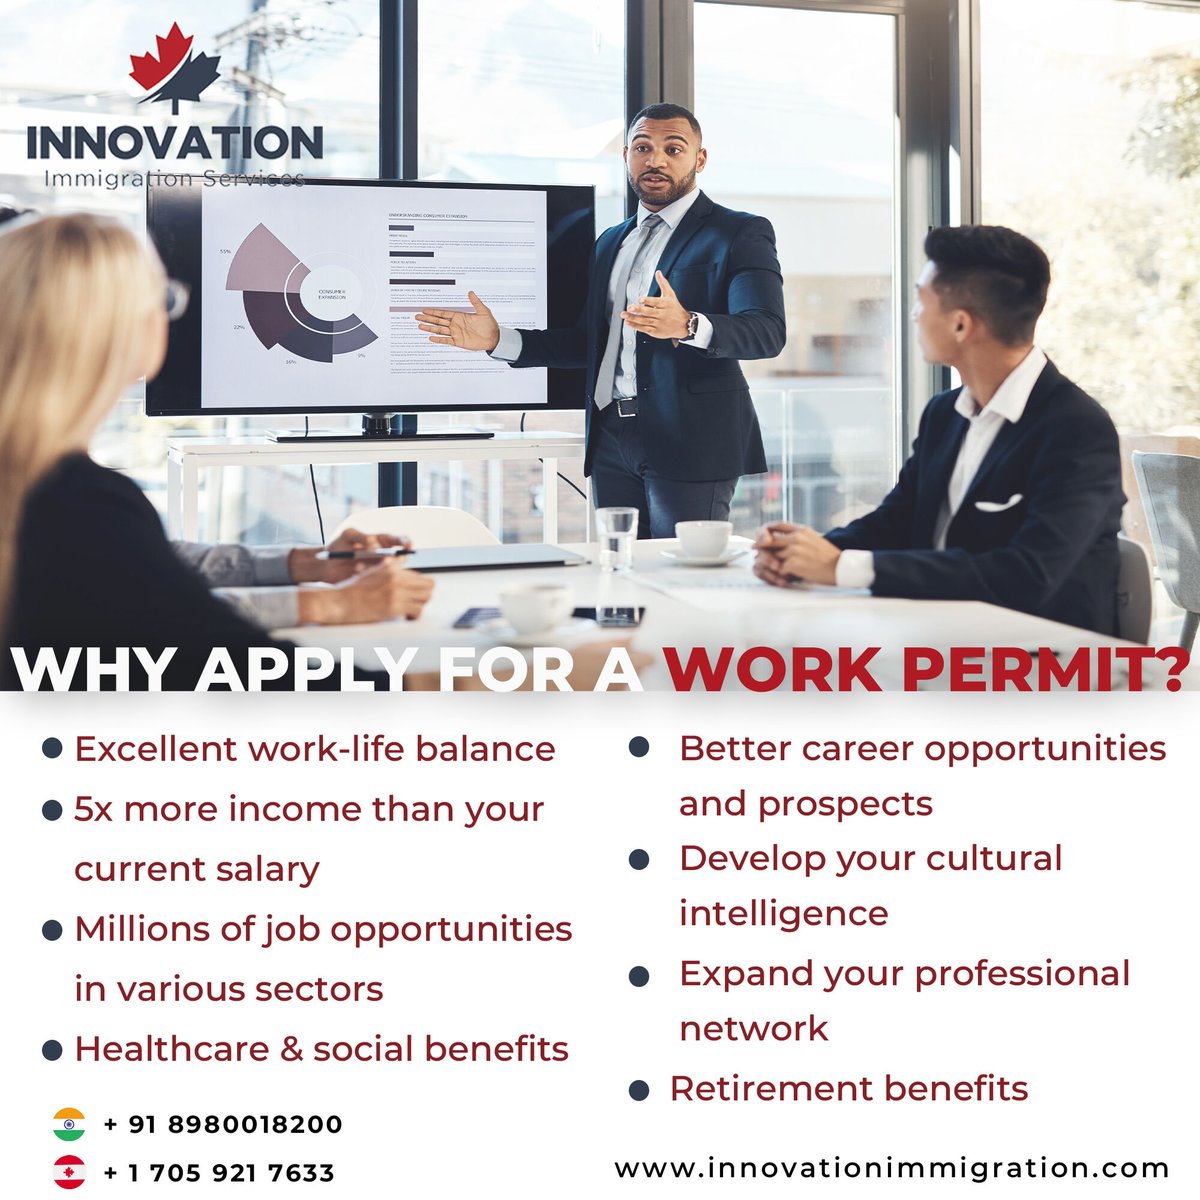 9 reasons why a work permit could be your key to a brighter future.
innovationimmigration.com/work-in-canada/
#canada #workpermit #workvisa #workincanada #jobsincanada #canadianjobs #movetocanada #liveincanada #immigratetocanada